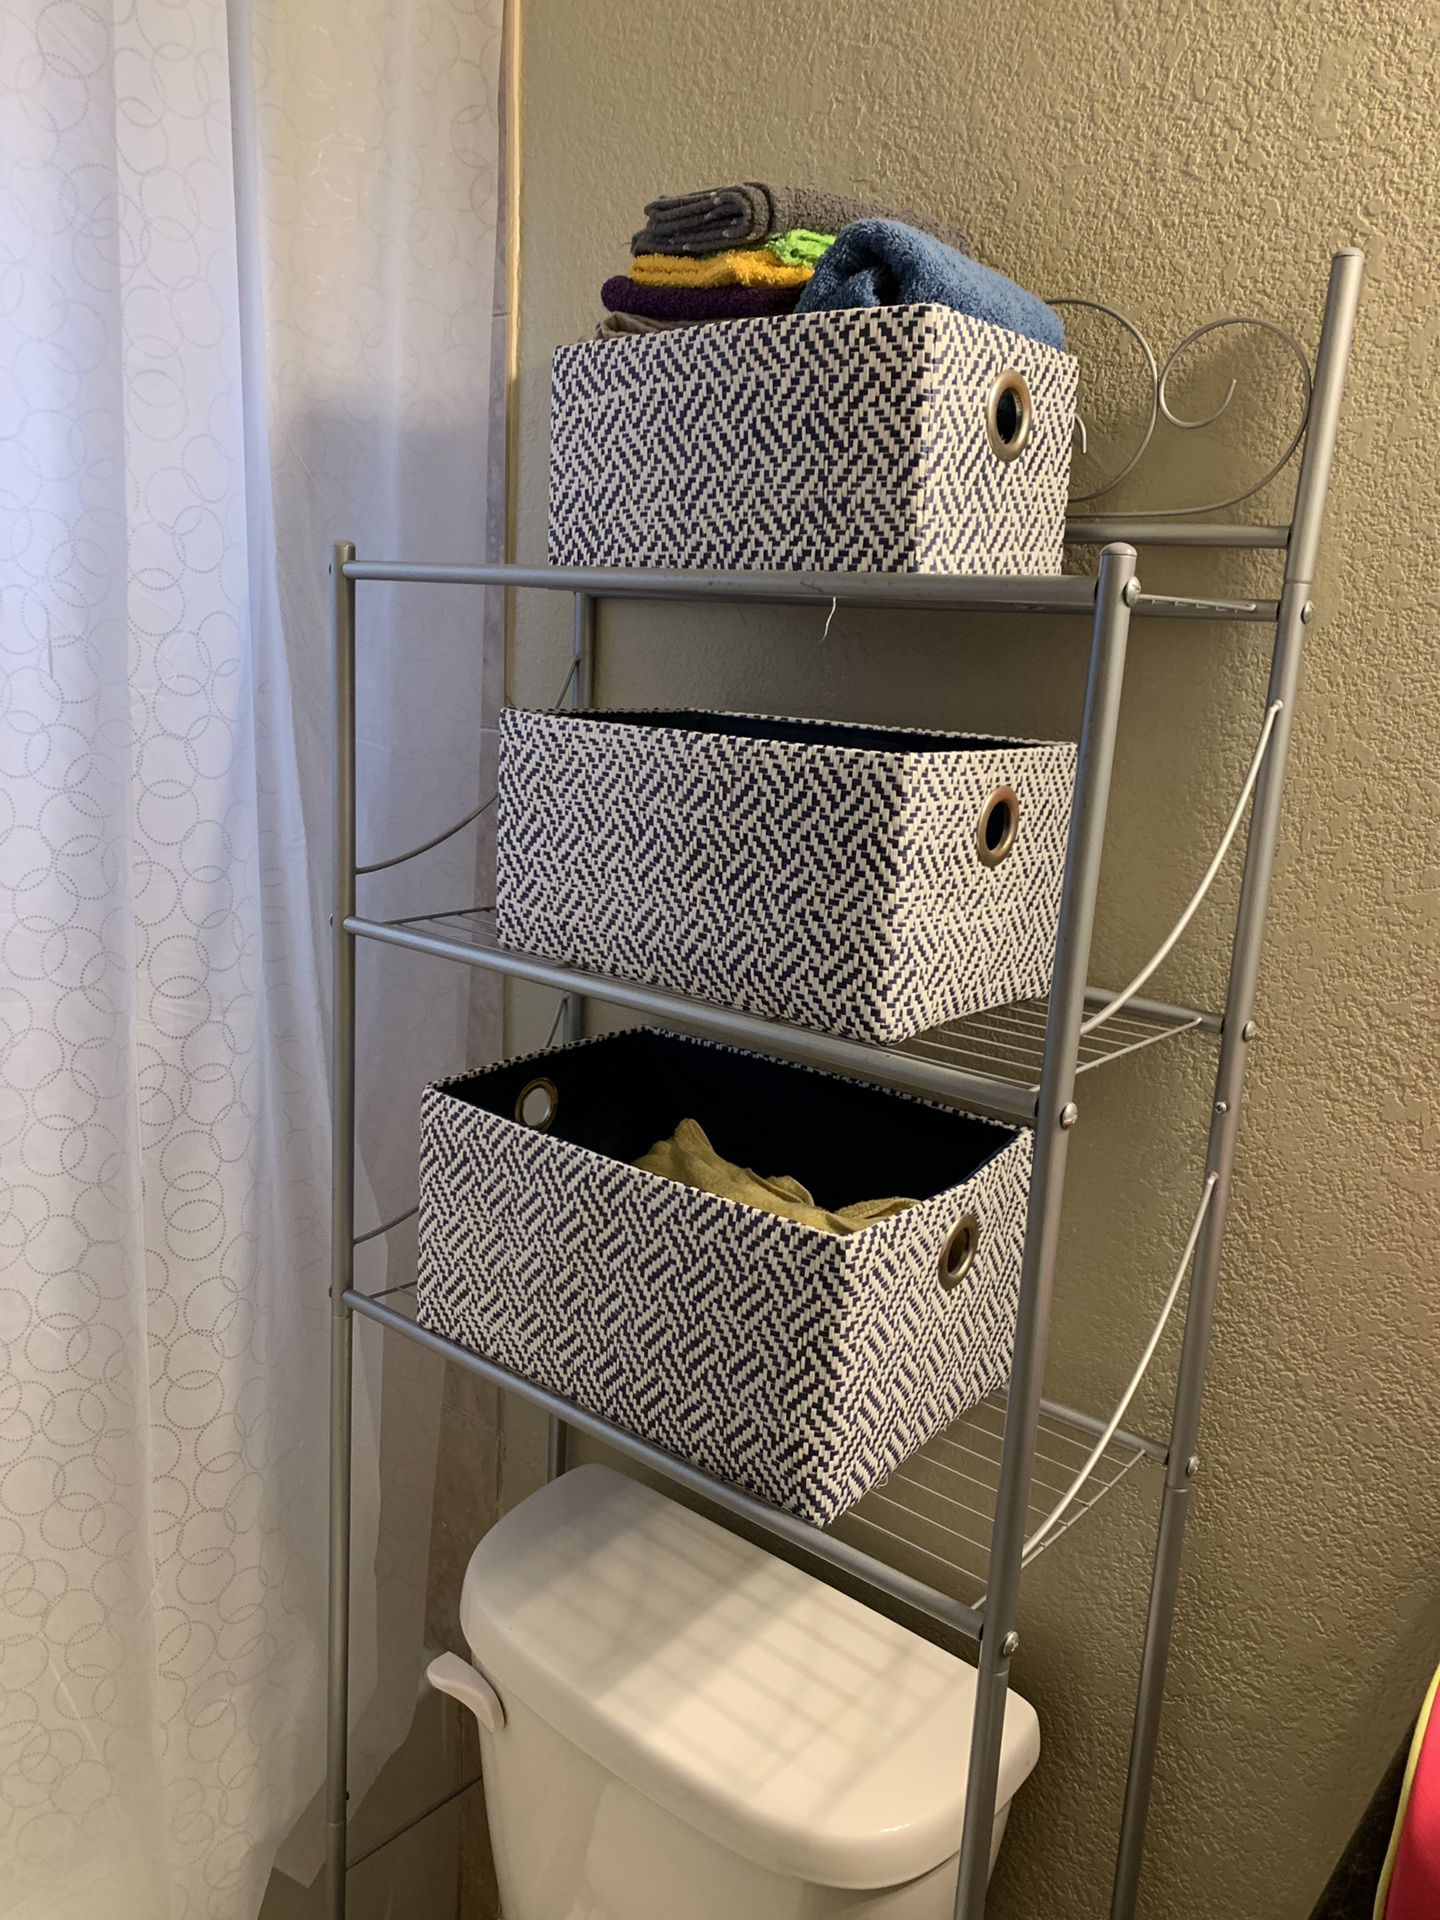 Bathroom Shelves with bins